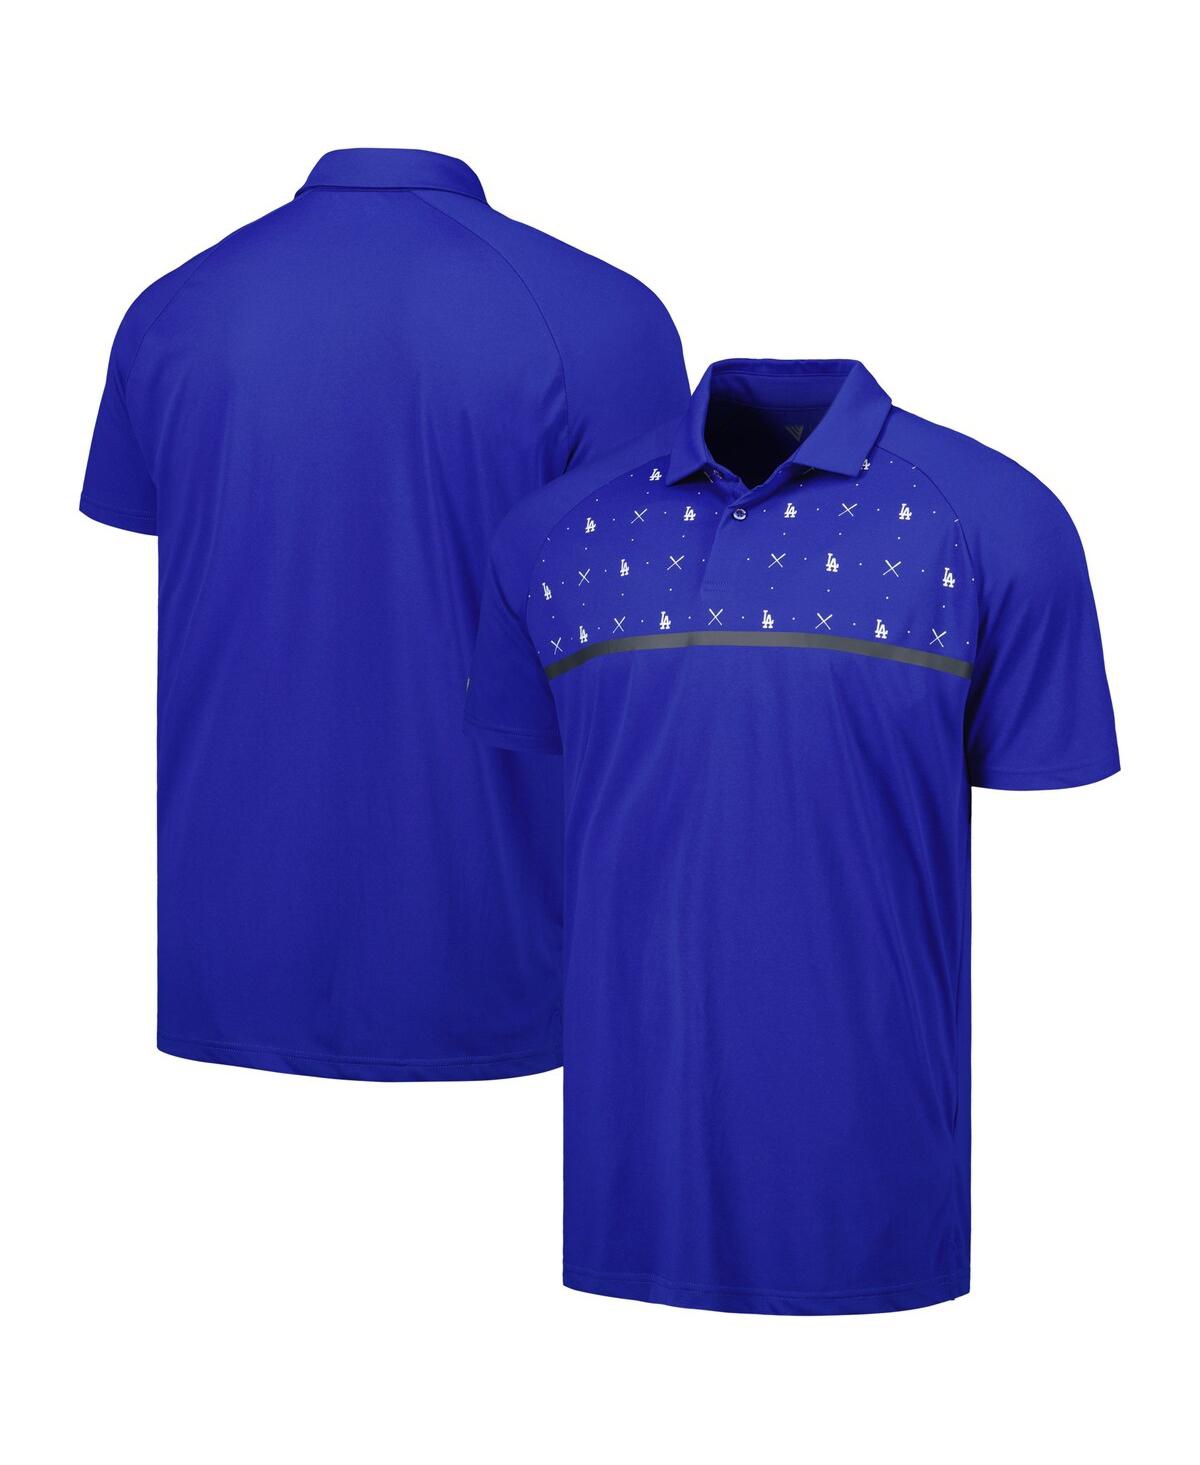 Shop Levelwear Men's  Royal Los Angeles Dodgers Sector Batter Up Raglan Polo Shirt